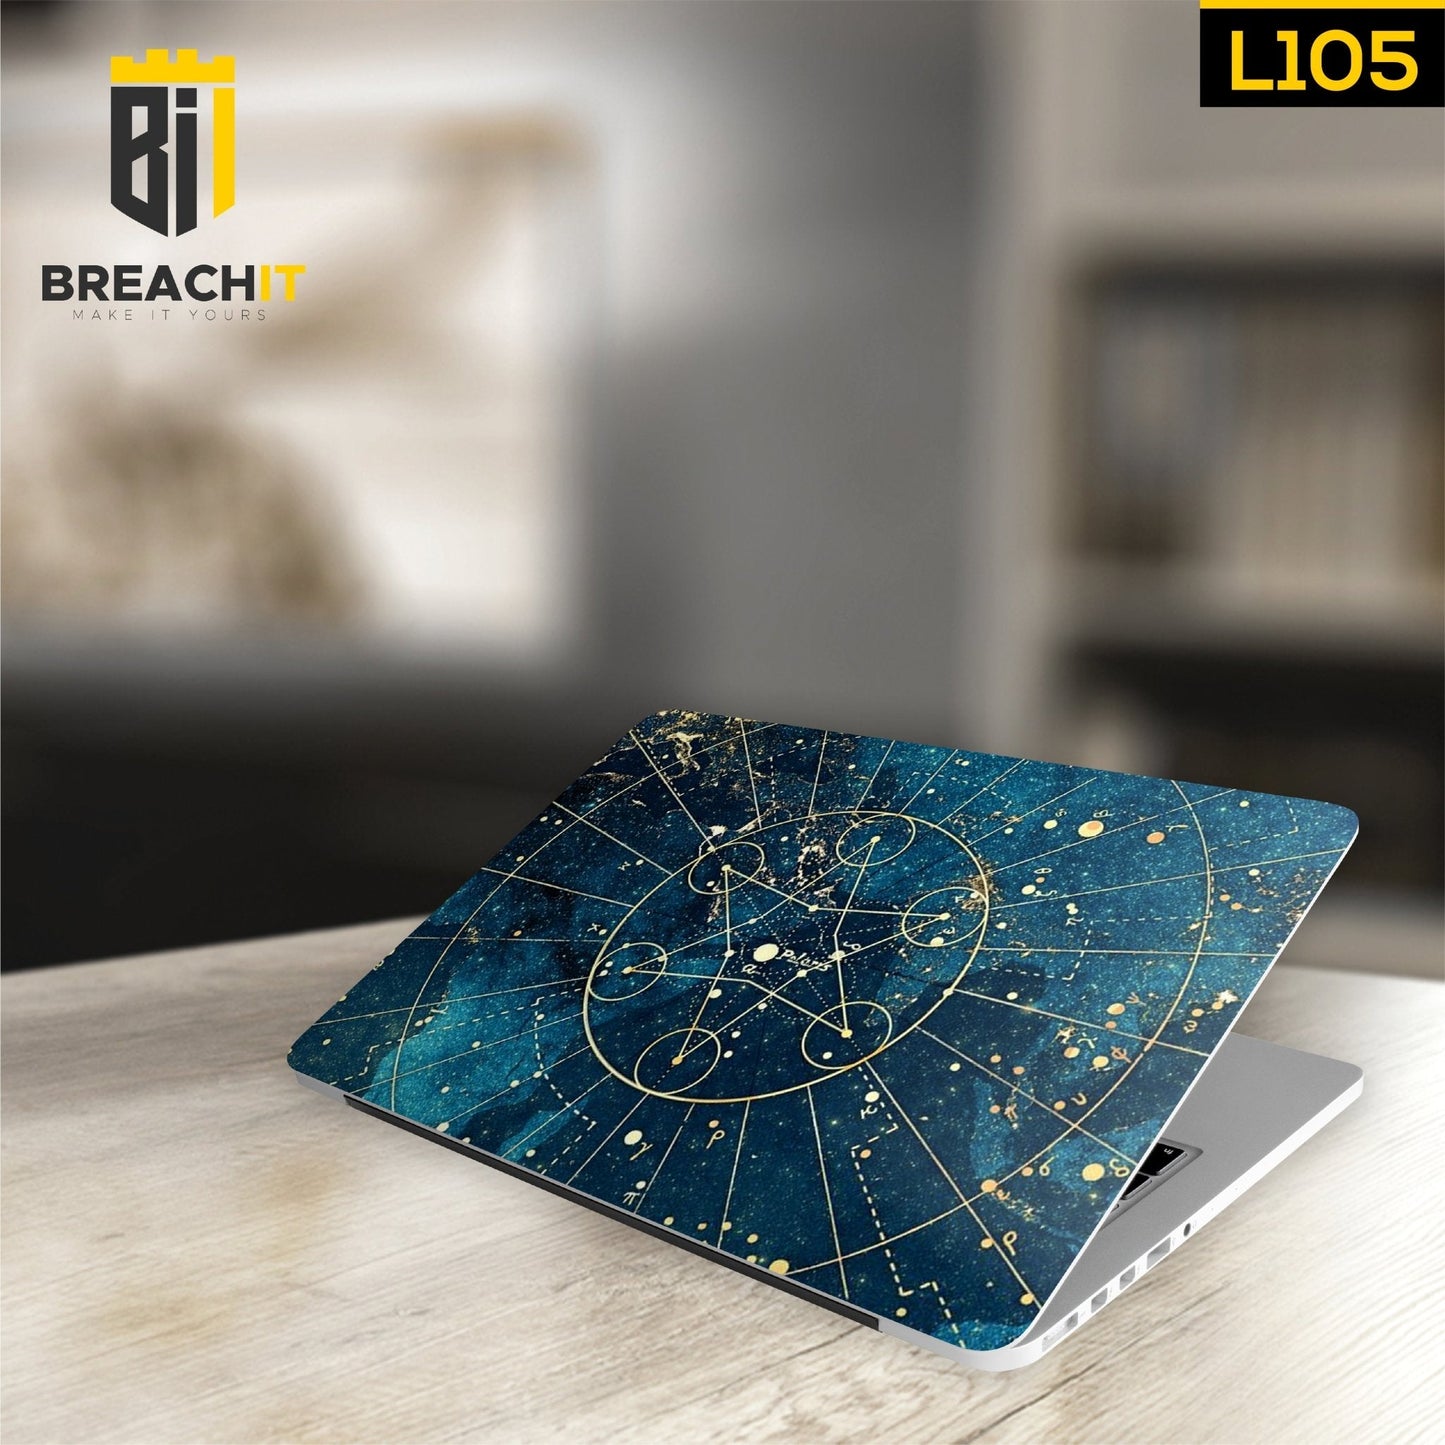 L105 Blue Abstract Laptop Skin - BREACHIT